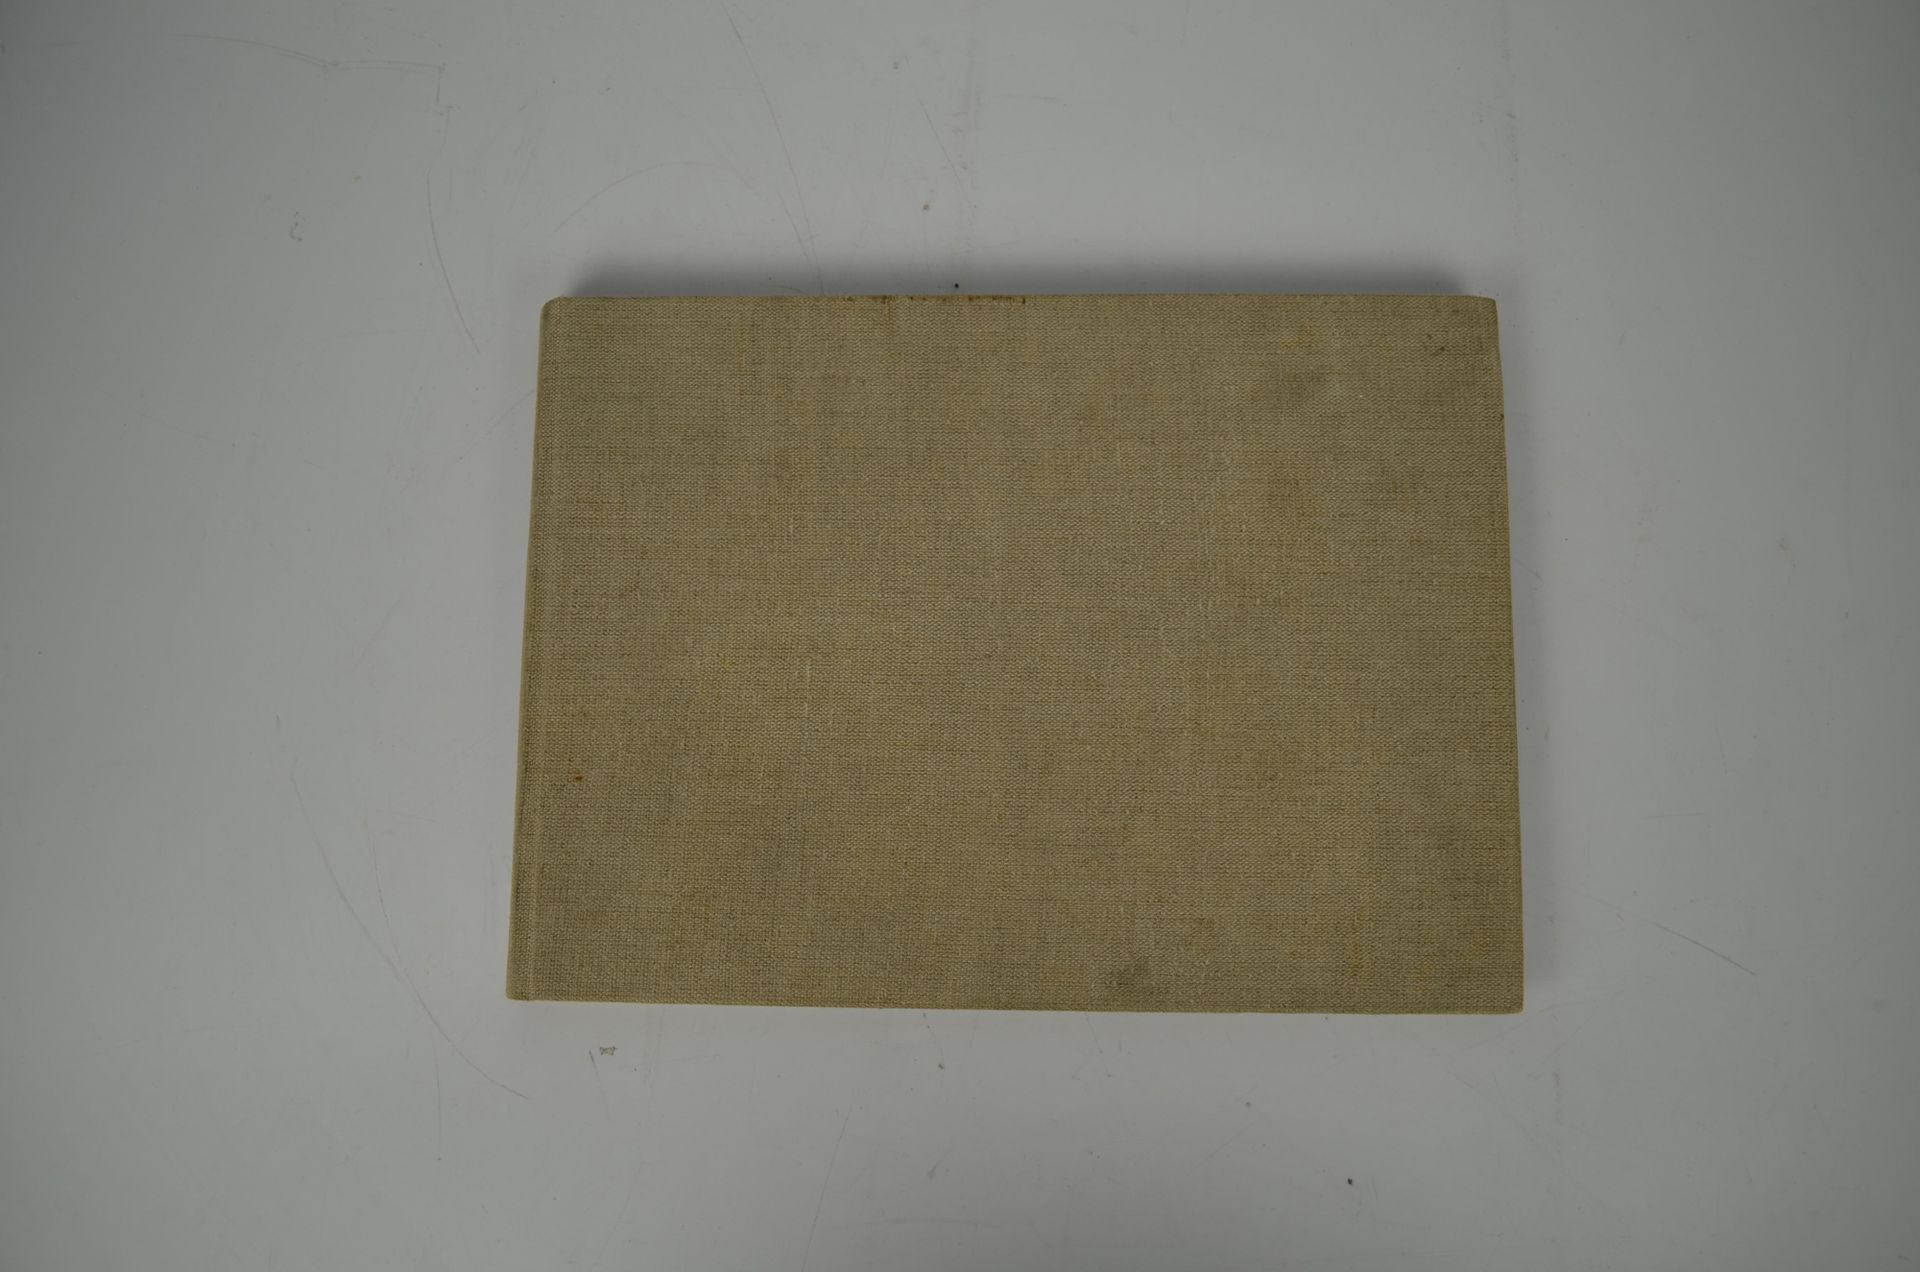 Catalogue de pièces de 正版宾尼法利纳备件目录

PininFarina备件目录，罕见。